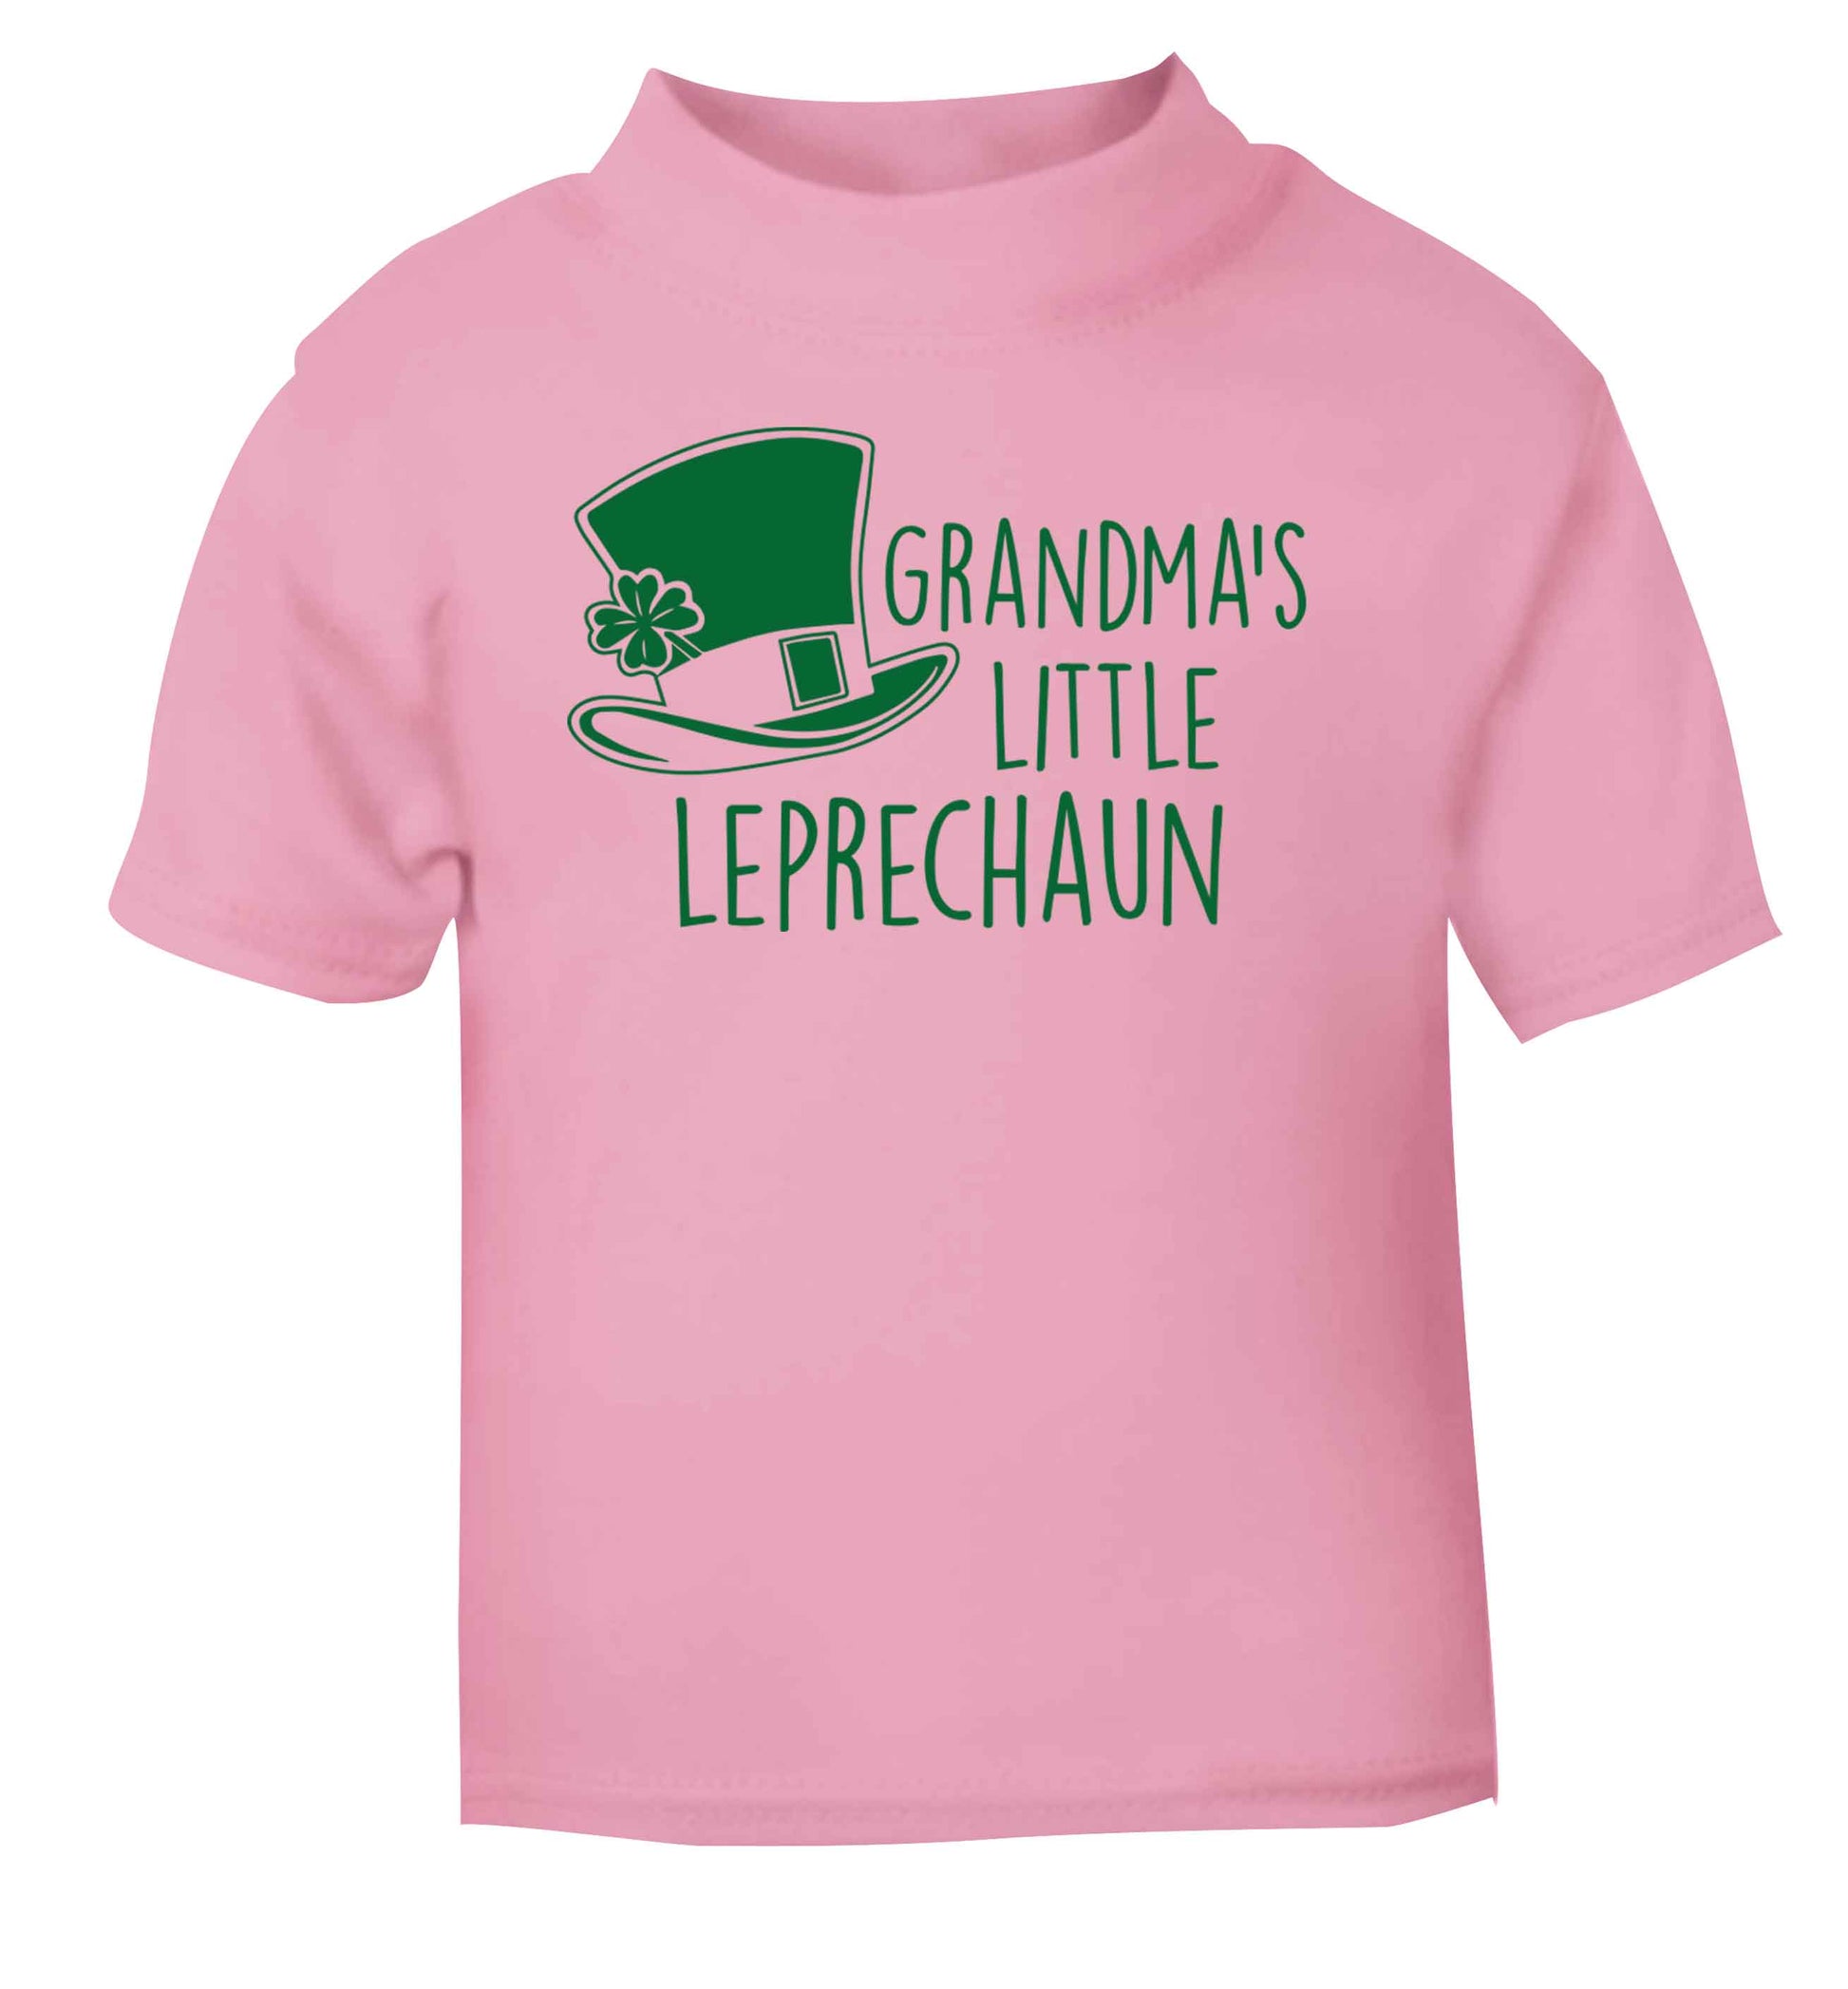 Grandma's little leprechaun light pink baby toddler Tshirt 2 Years